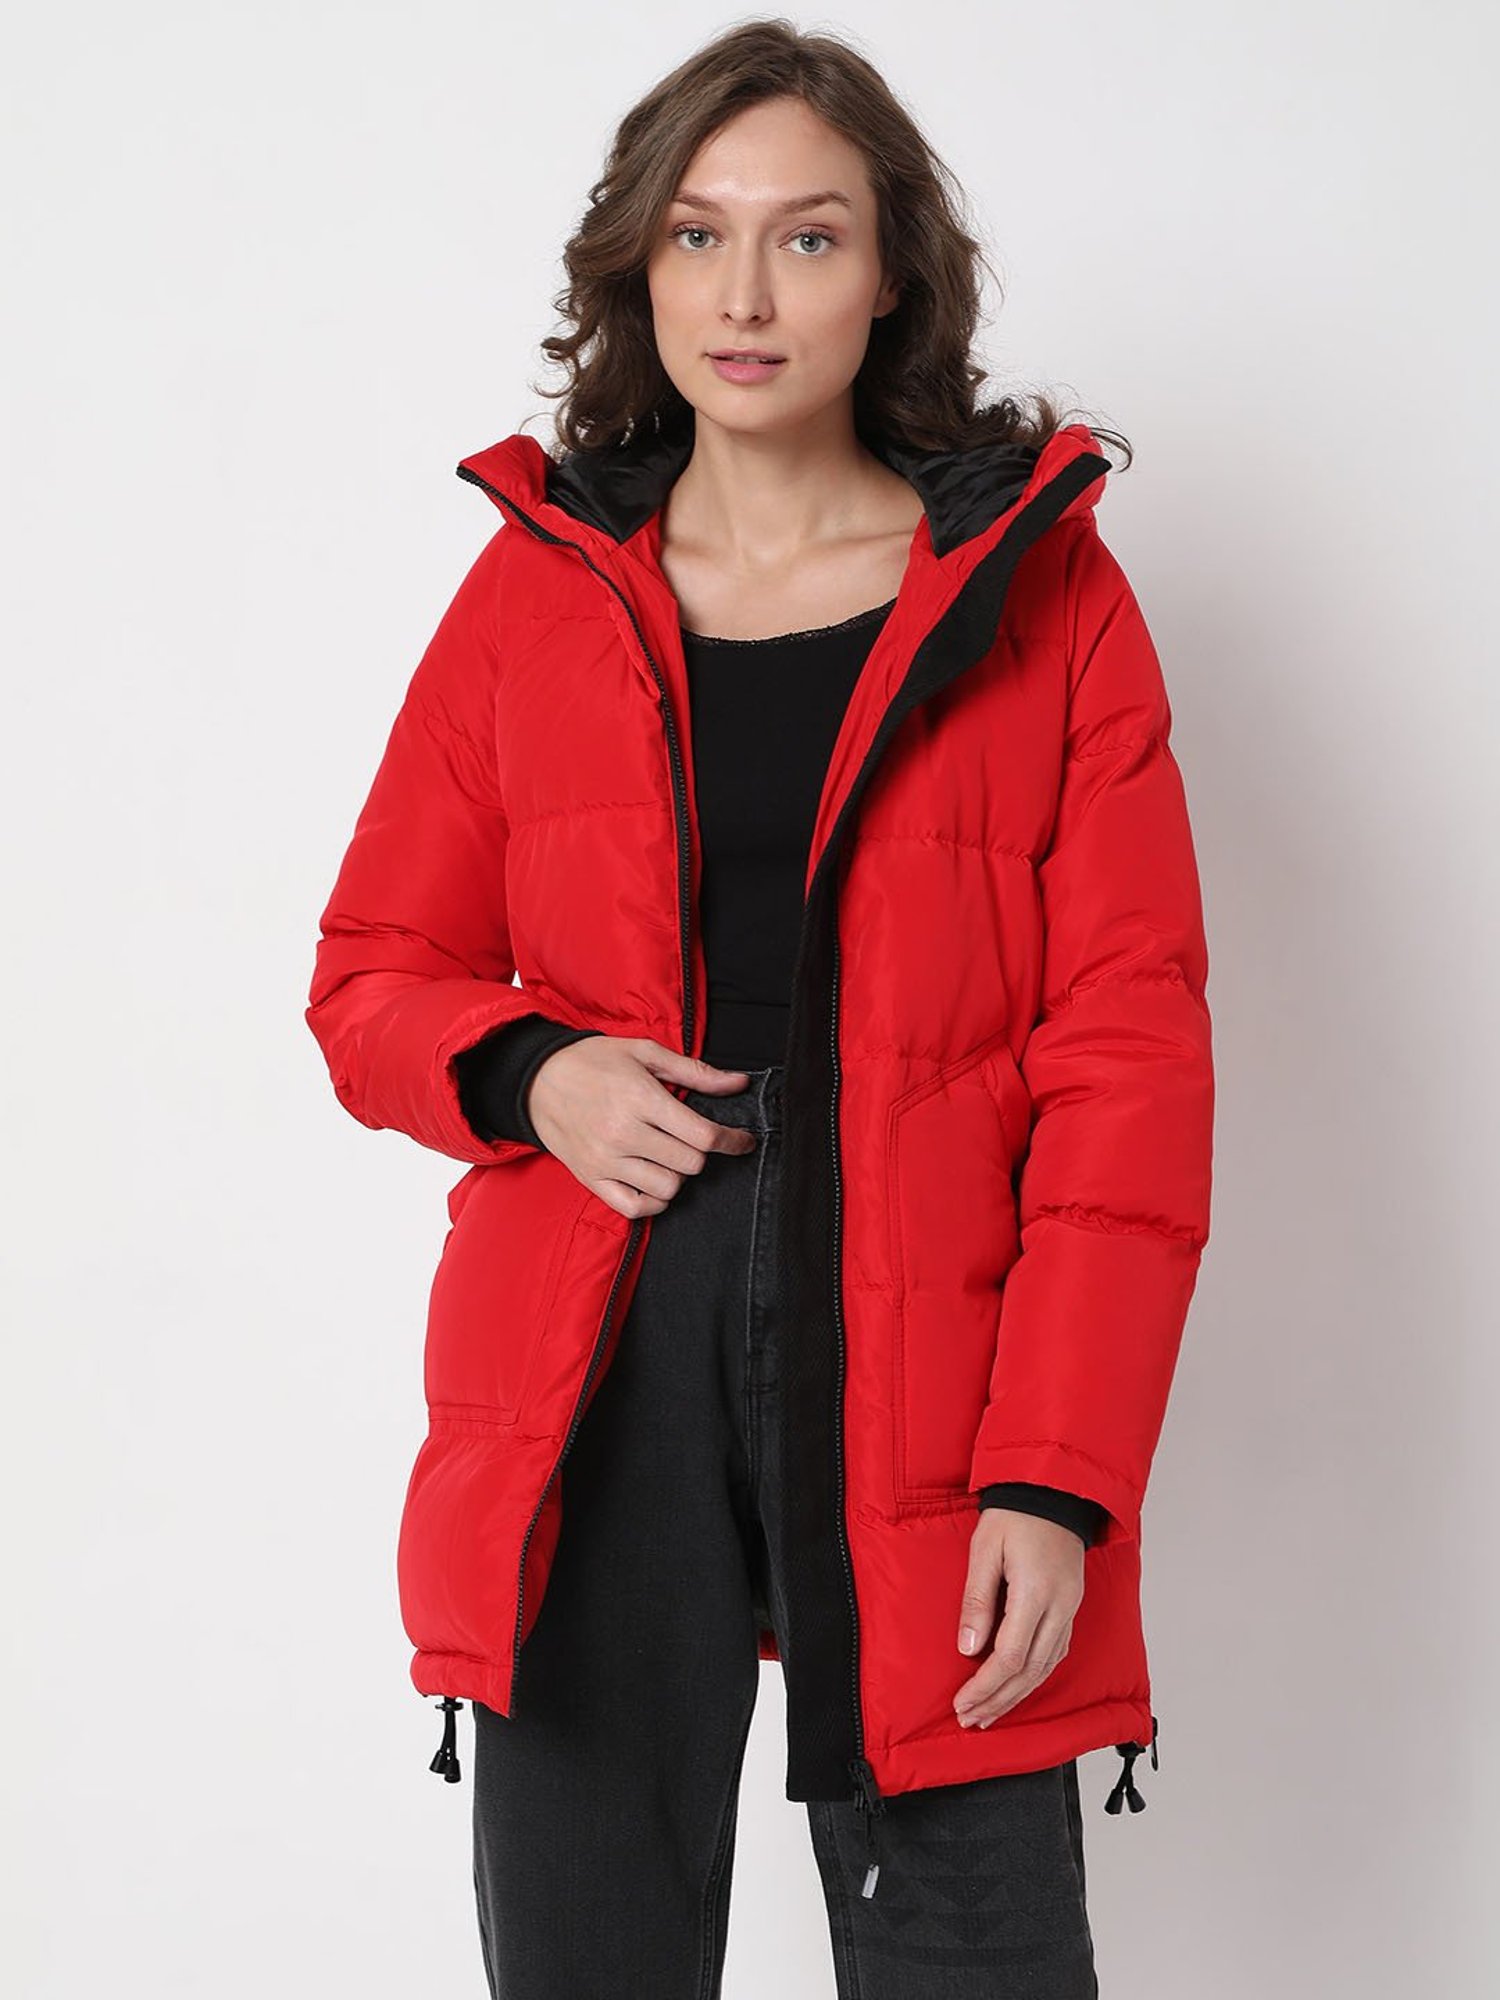 Opdatering Svømmepøl elskerinde Buy Vero Moda Red Quilted Puffer Jacket for Women Online @ Tata CLiQ